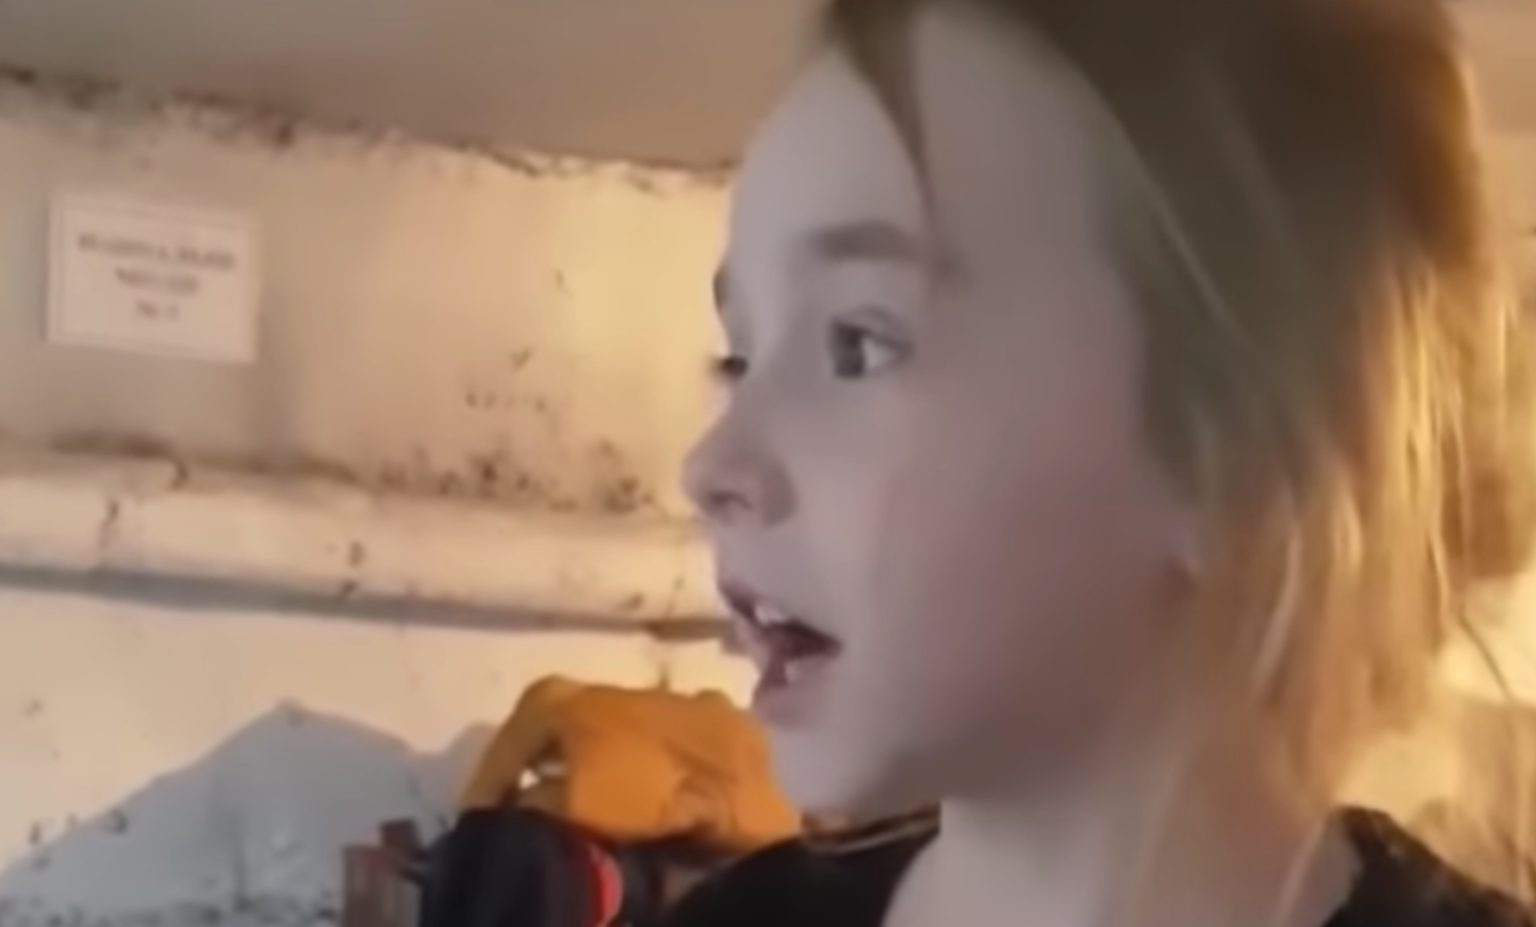 Ukrainian Girl Singing Let It Go In Bunker Goes Viral